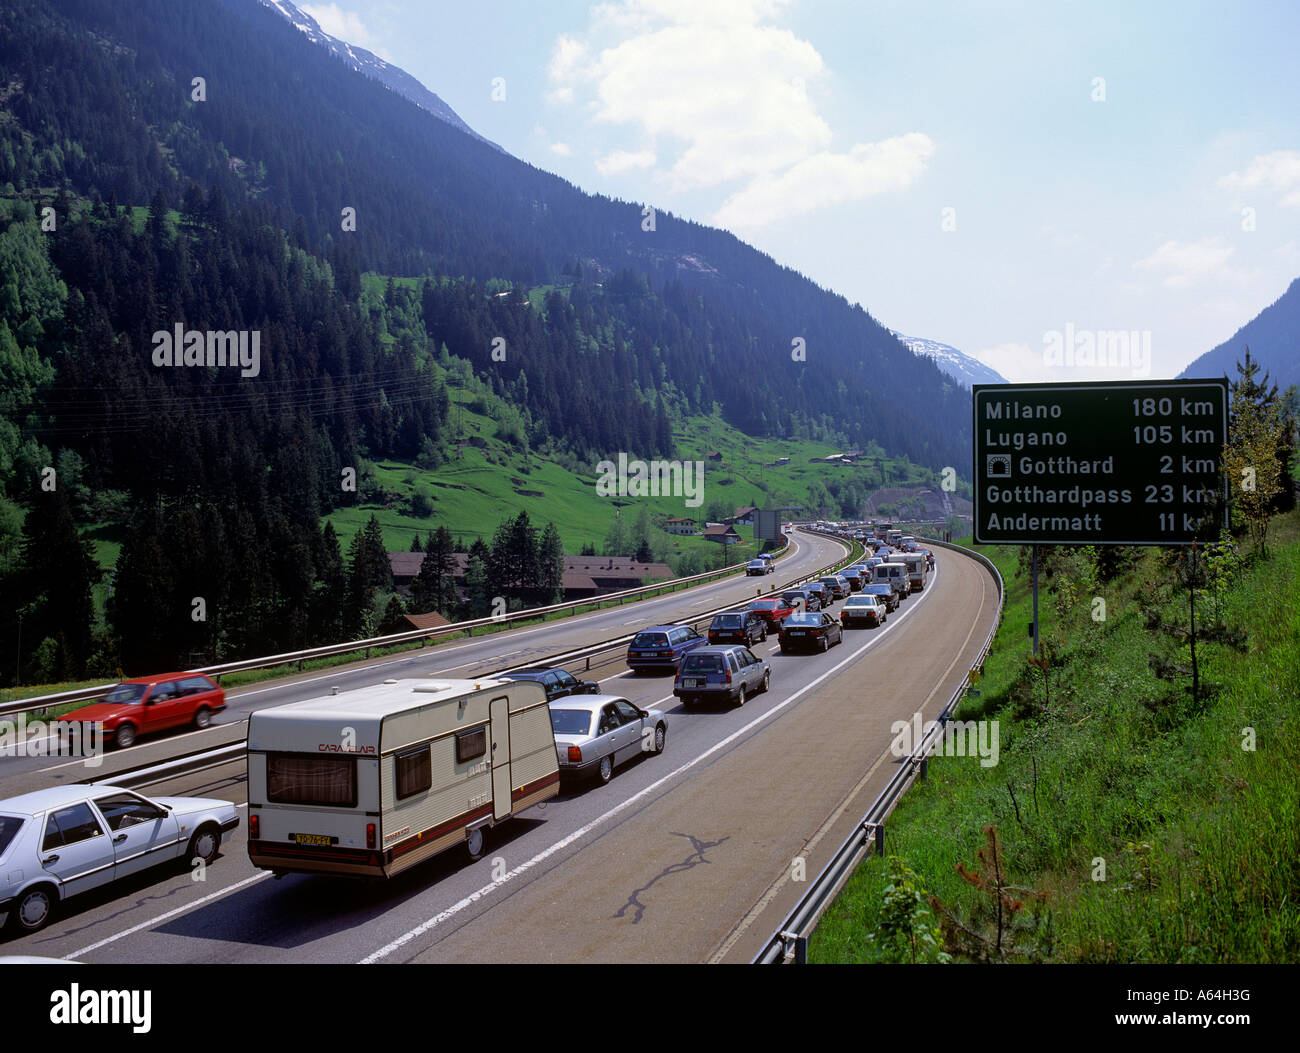 holiday traffic congestion jam on saint gotthard motorway near village of wassen swiss alpes canton of uri switzerland Stock Photo